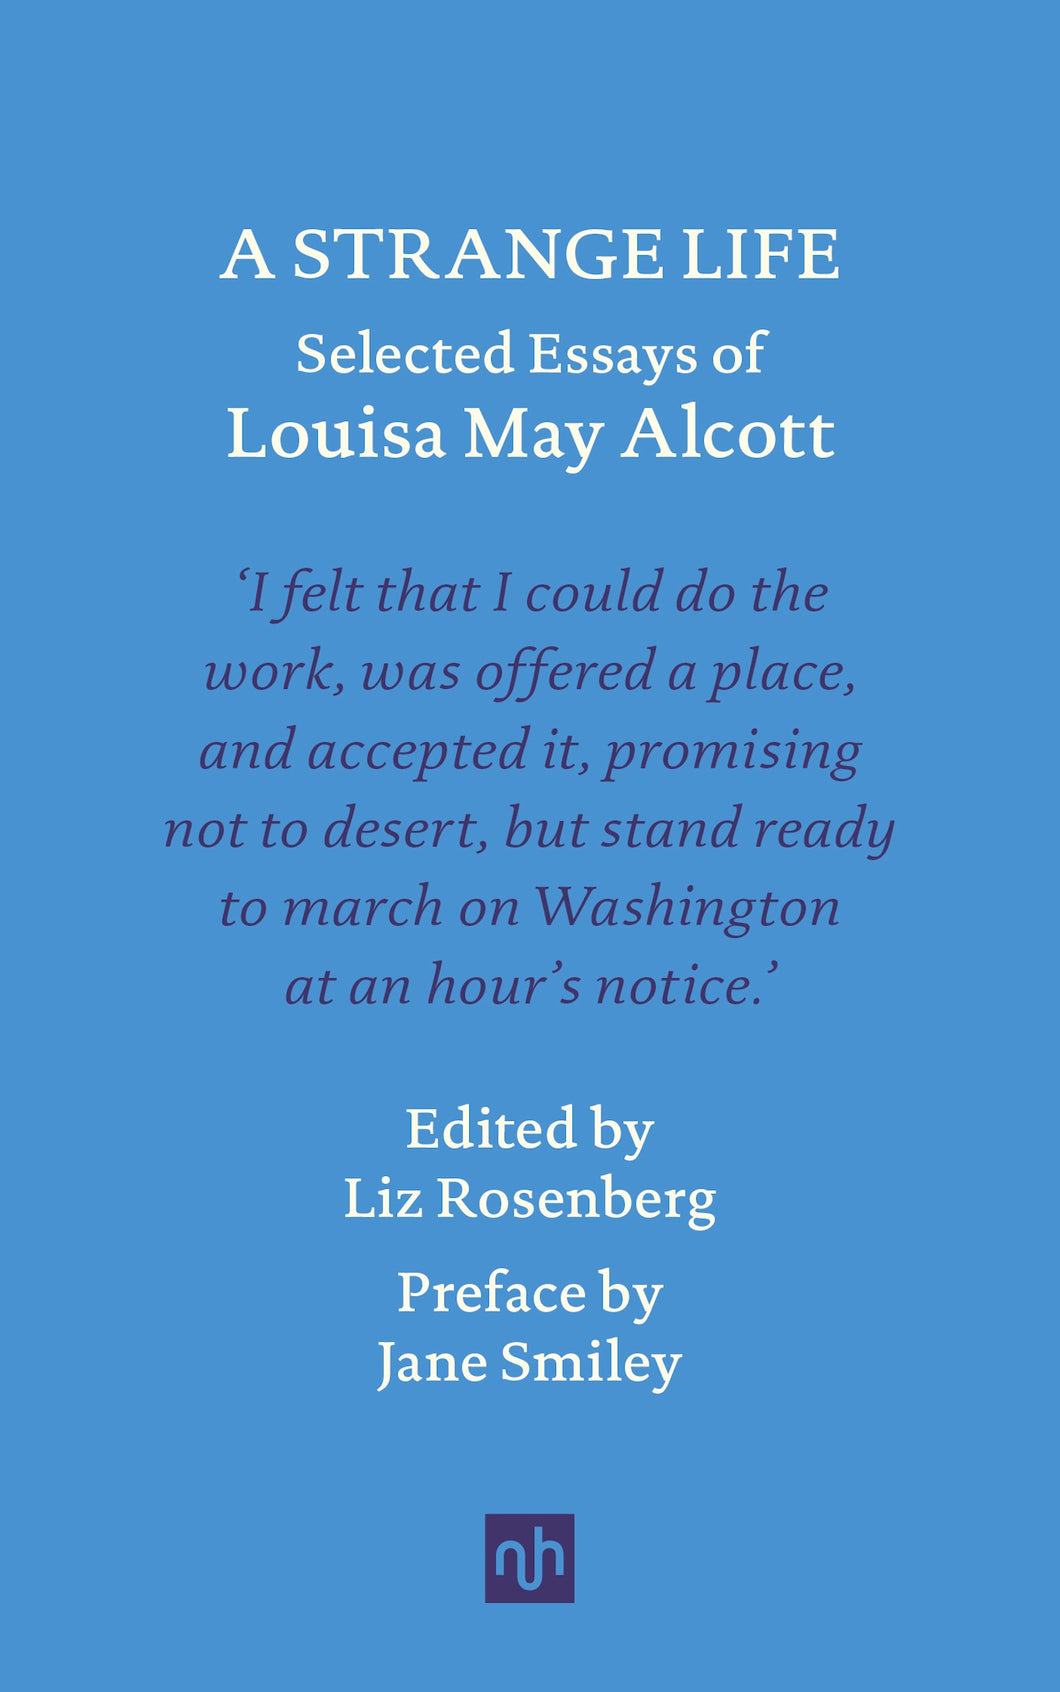 A Strange Life: Selected Essays of Louisa May Alcott ร้านหนังสือและสิ่งของ เป็นร้านหนังสือภาษาอังกฤษหายาก และร้านกาแฟ หรือ บุ๊คคาเฟ่ ตั้งอยู่สุขุมวิท กรุงเทพ